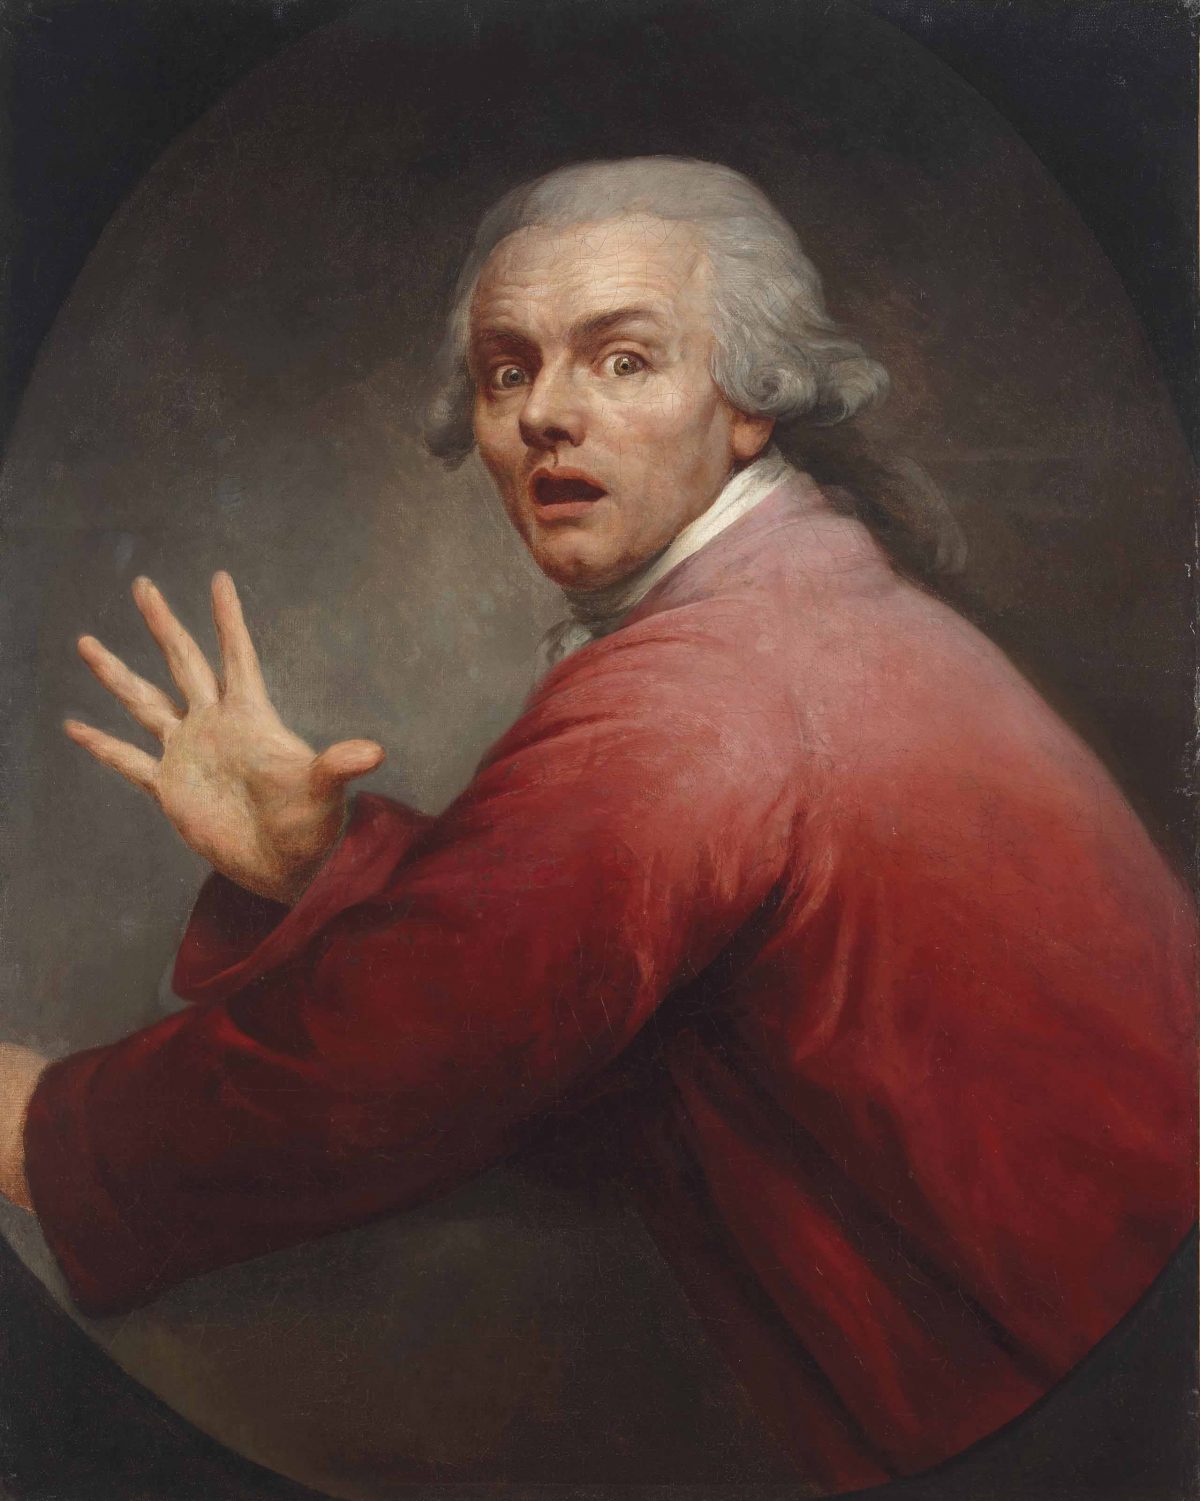 Joseph Ducreux, ""Self Portrait as Surprised and Terrorized Man""